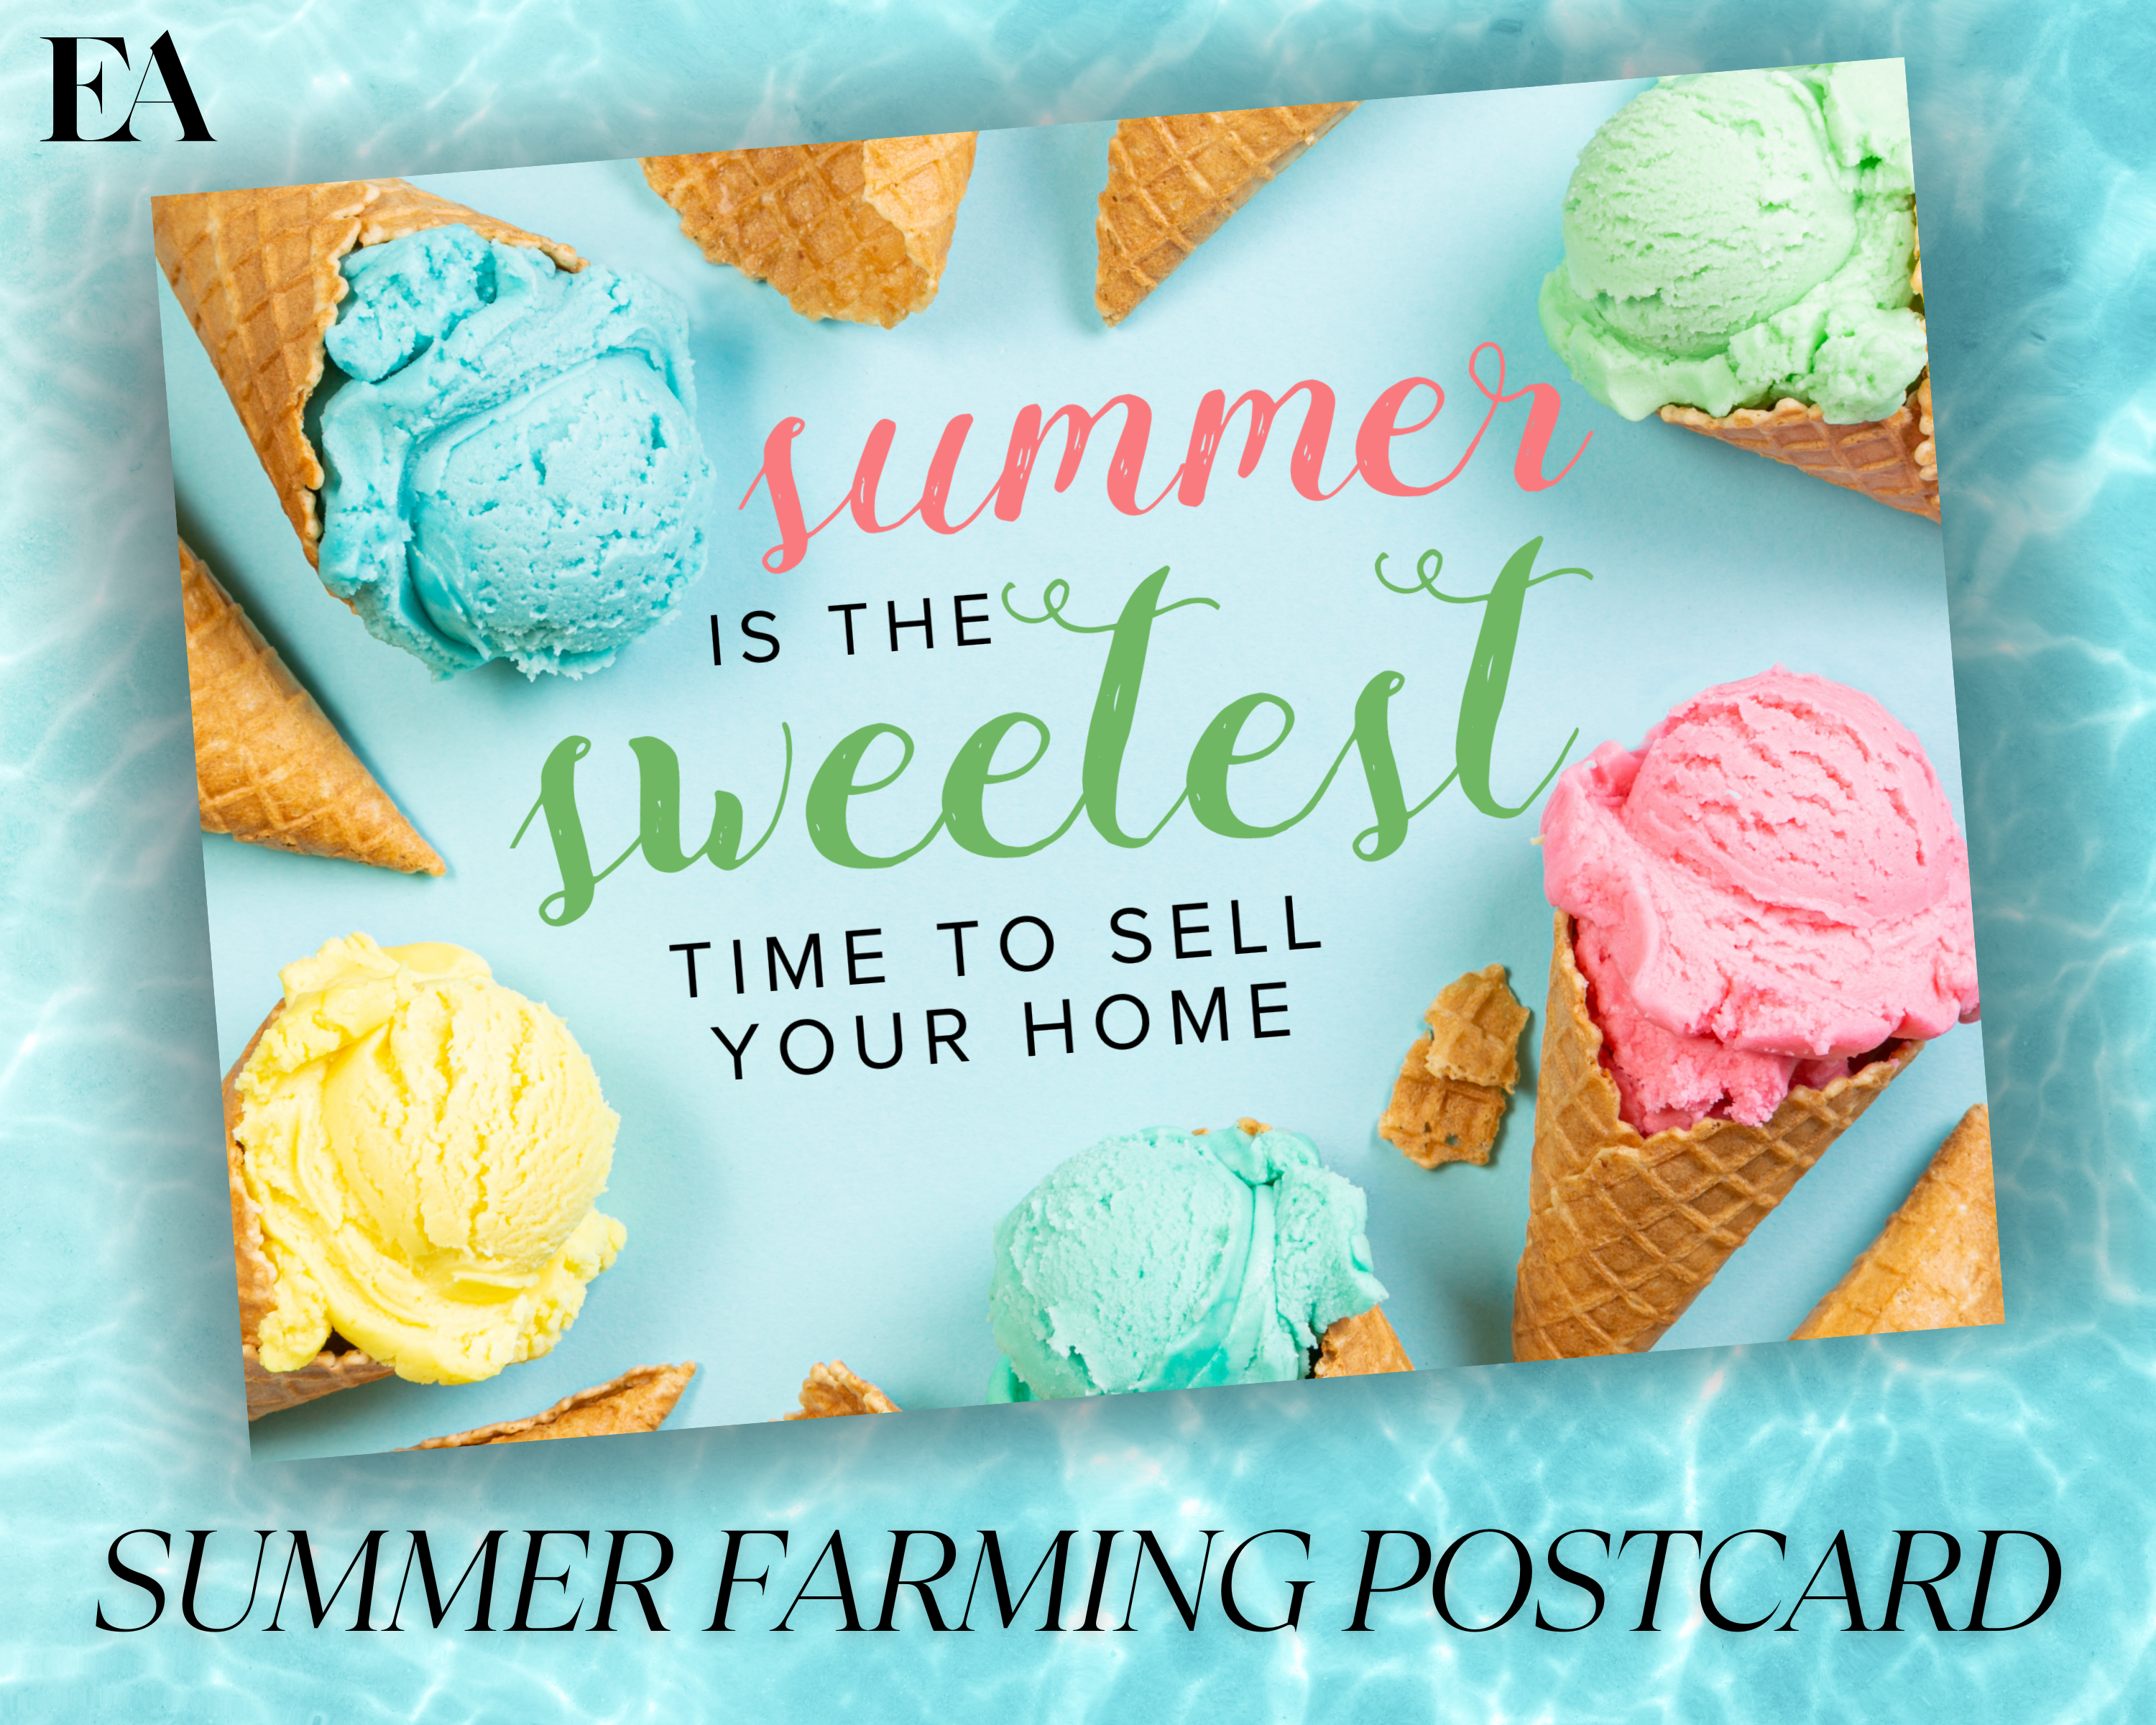 Real Estate Summer Postcard Template Summer Farming Postcard Home Seller Postcard Real Estate Farming Farming Marketing Canva Postcard Mail